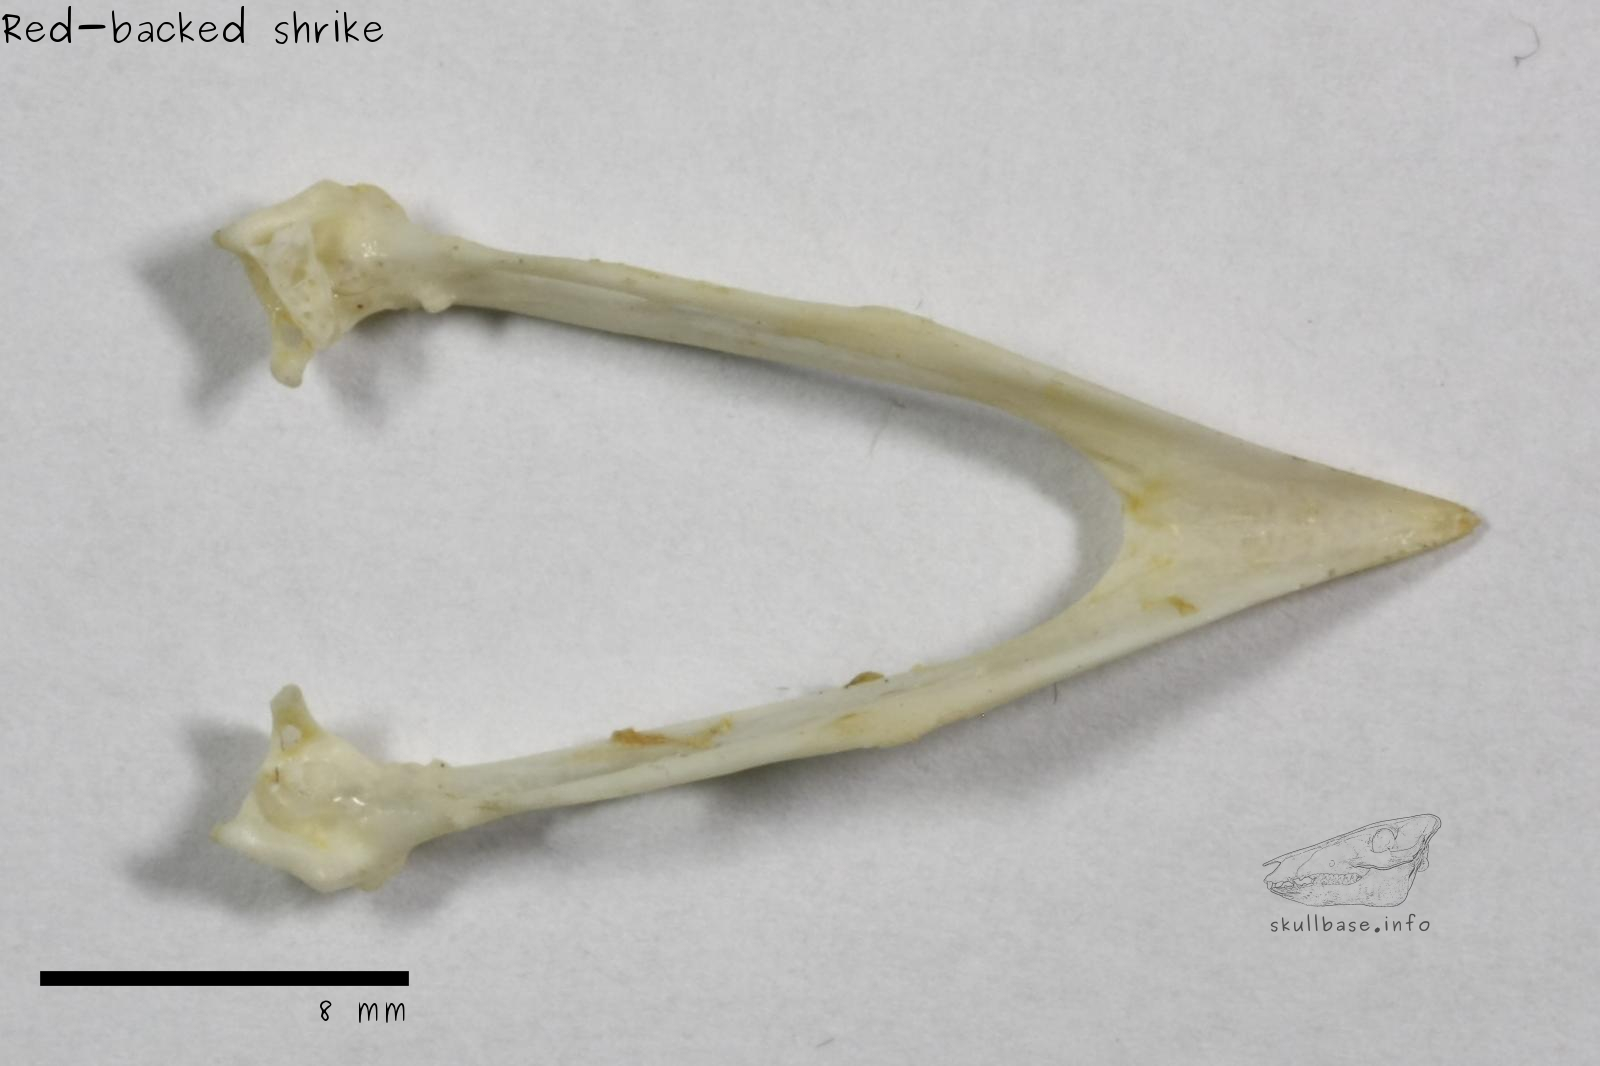 Red-backed shrike (Lanius collurio) jaw